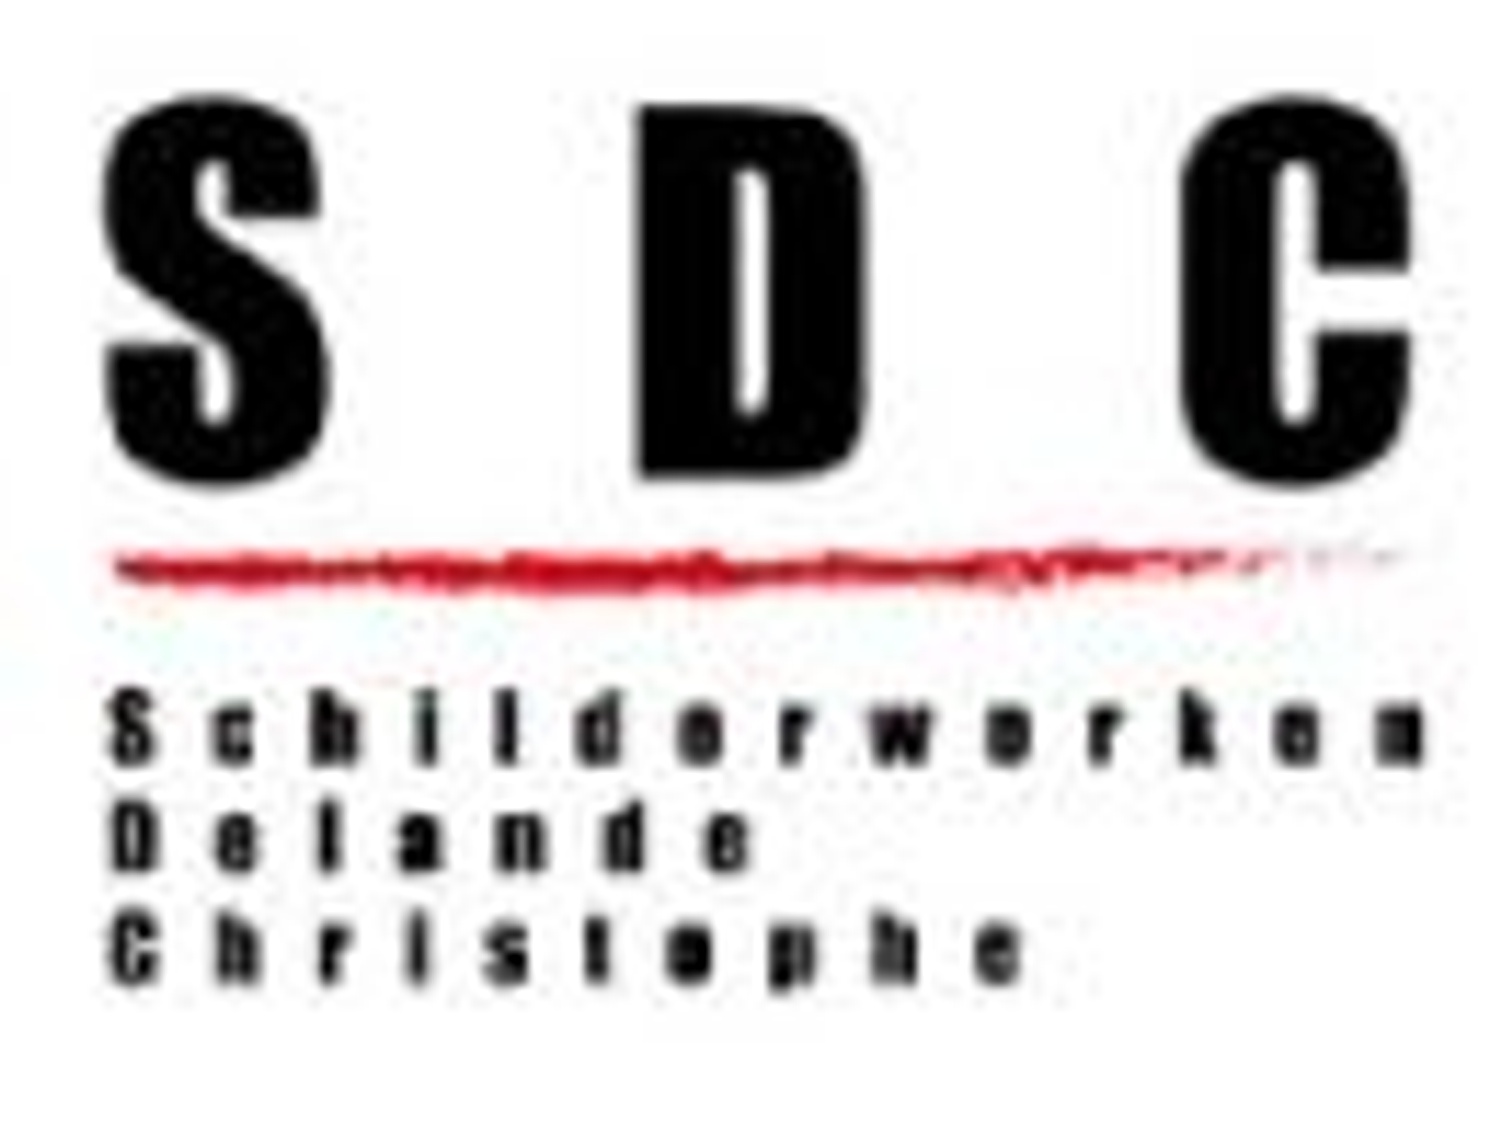 logo SDC